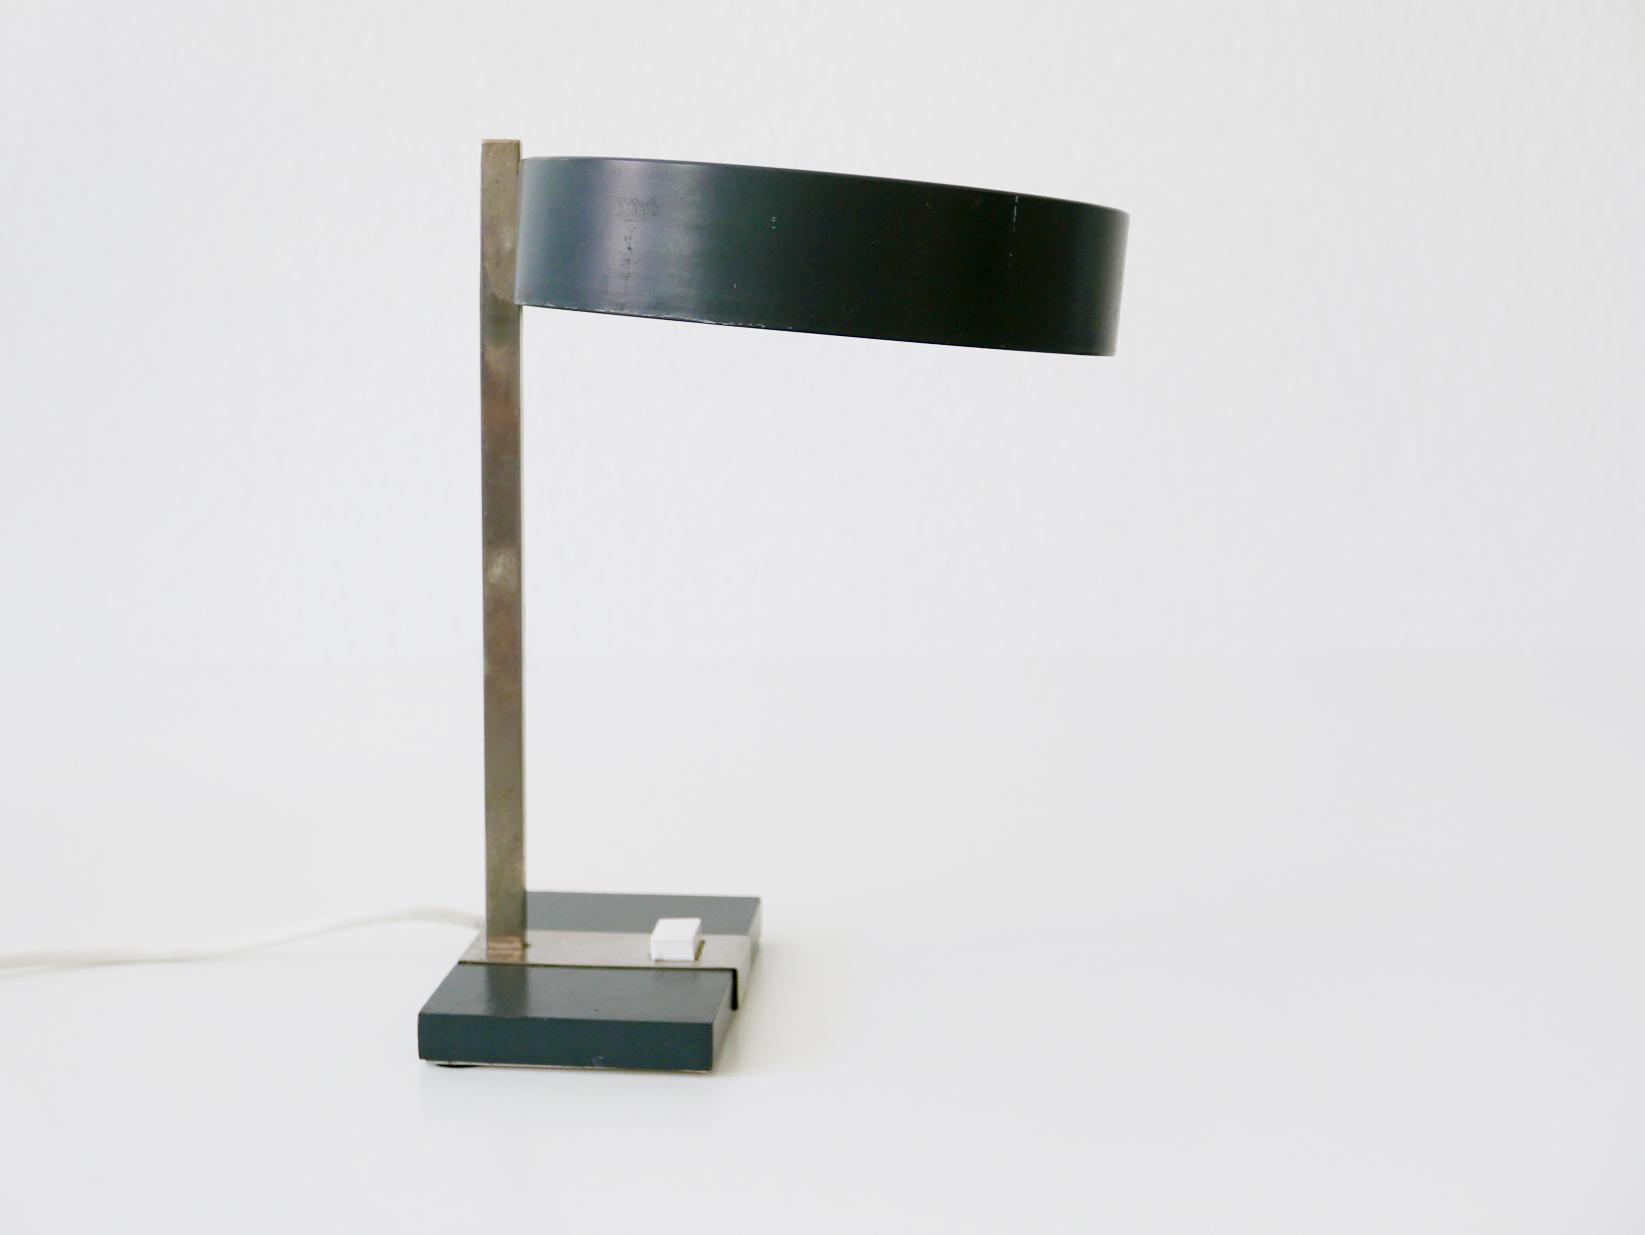 Metal Elegant Mid-Century Modern Table Lamp or Desk Light by Hillebrand, 1960s Germany For Sale